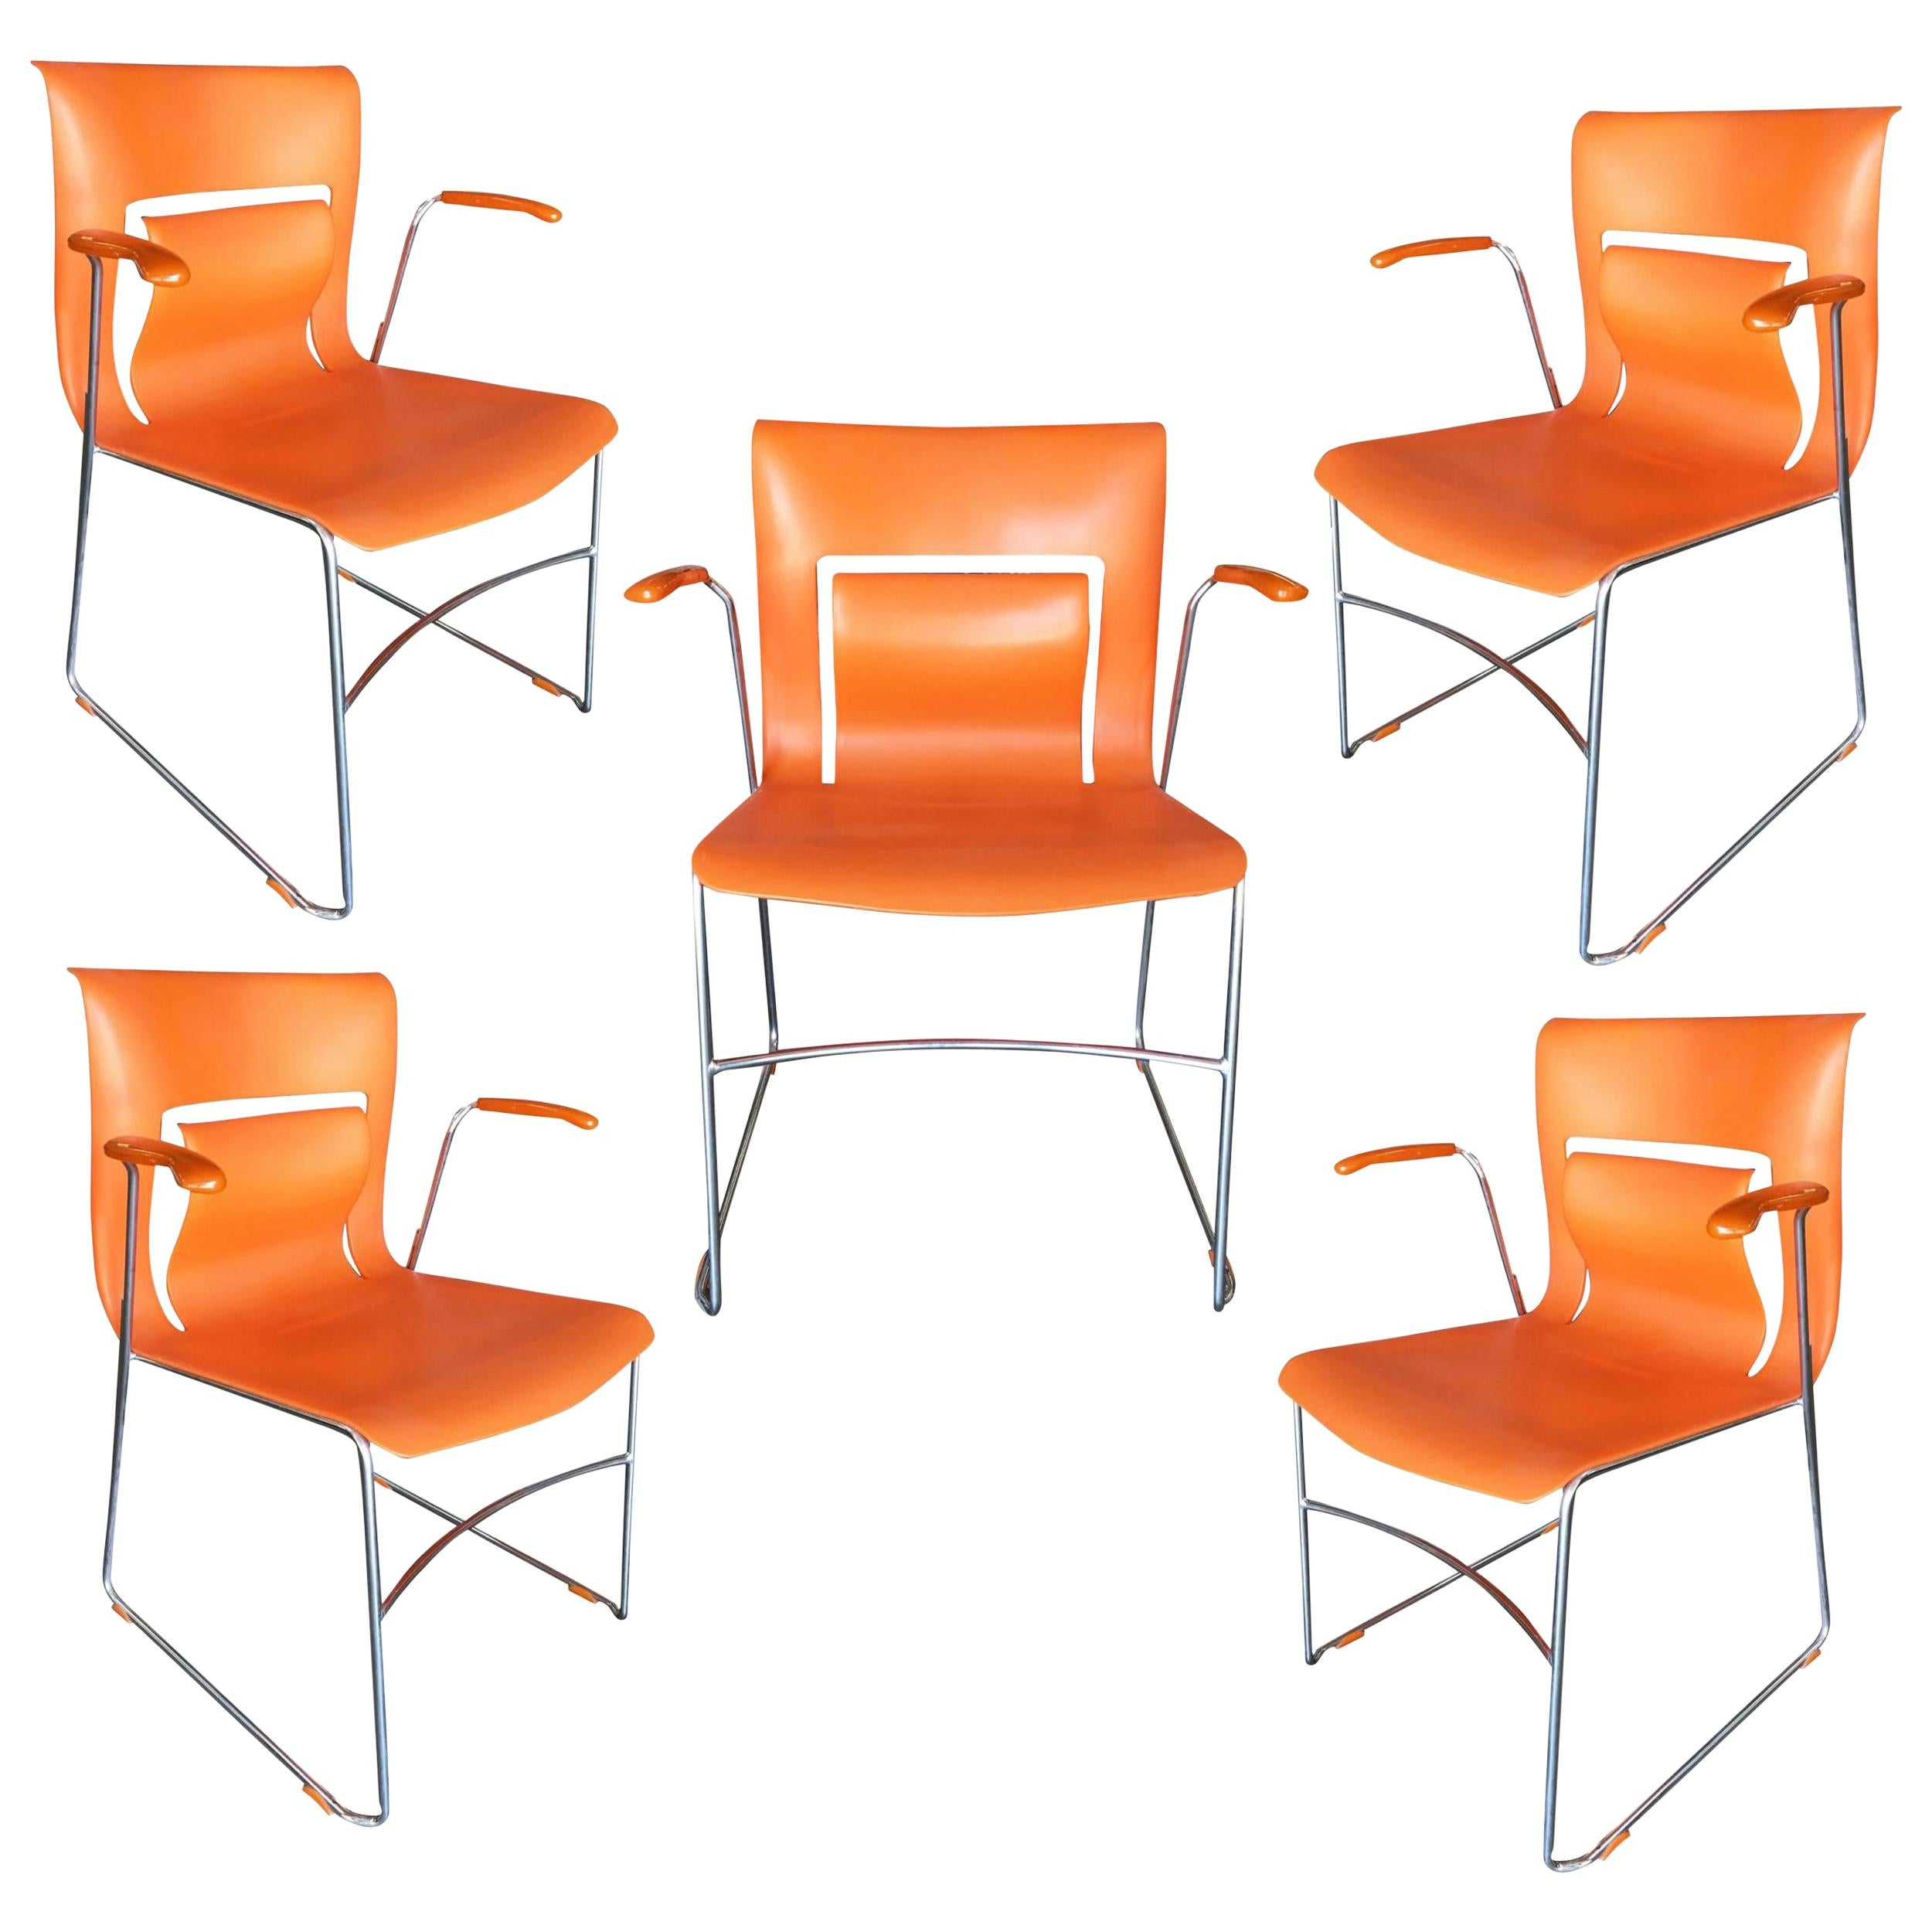 Sets, Rare Orange Stylex "Rythm" Armchair by Sva Cvek, Sets of 5 For Sale